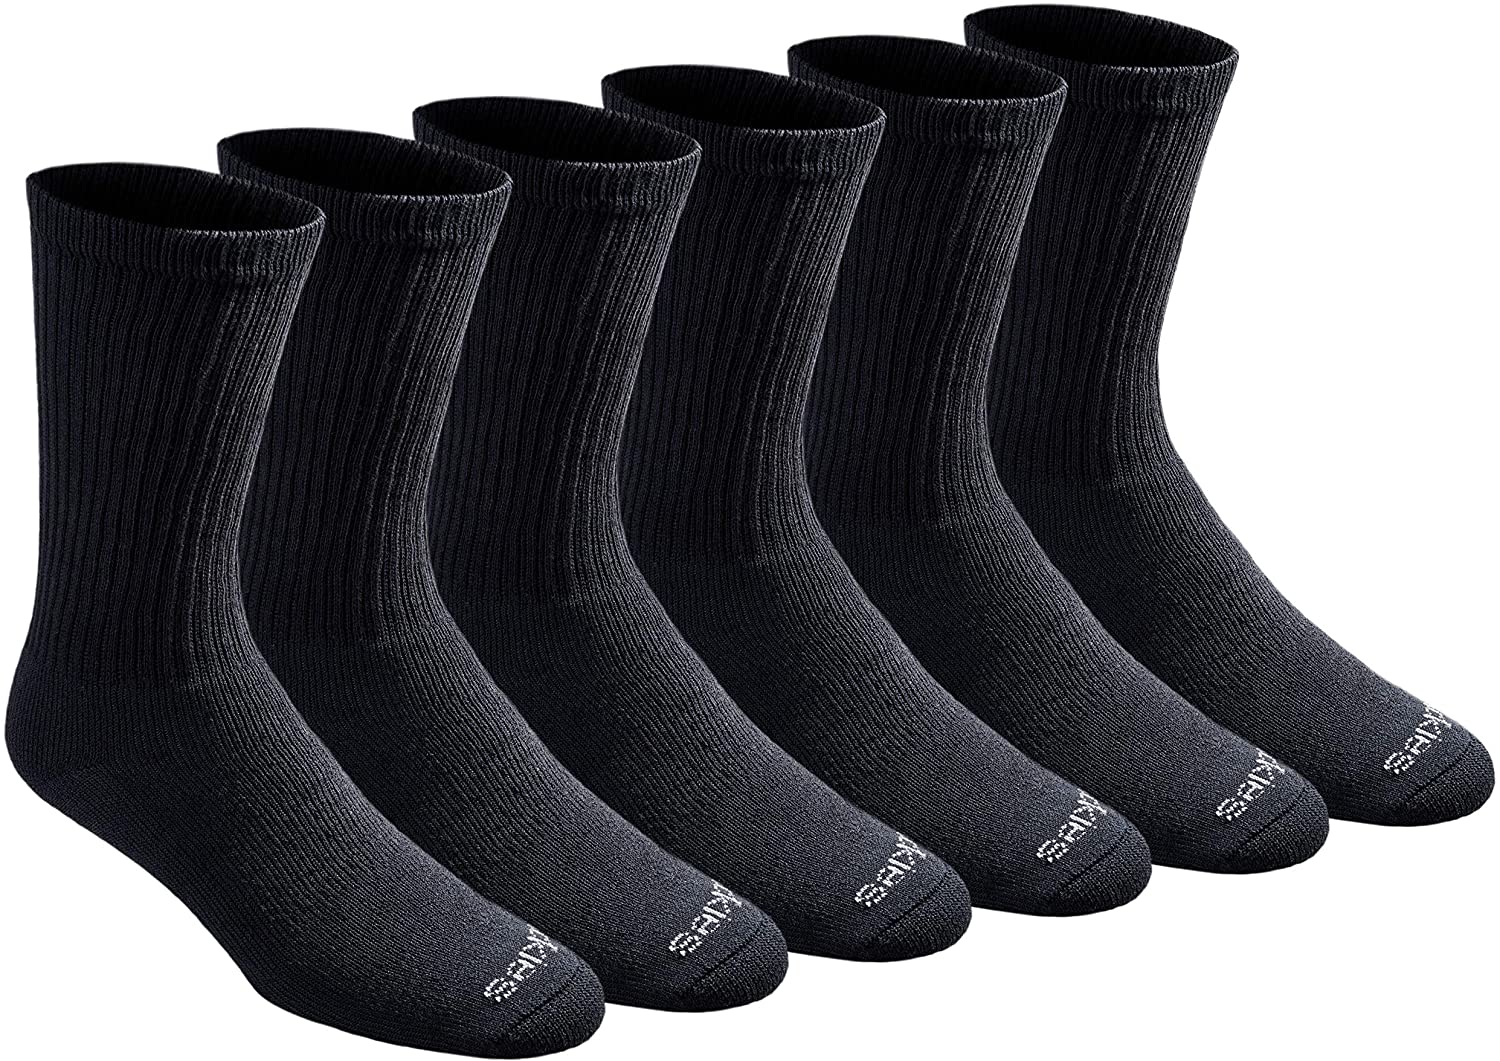 Dickies Men's Dri-tech Moisture Control Crew Socks Multipack, Black ...